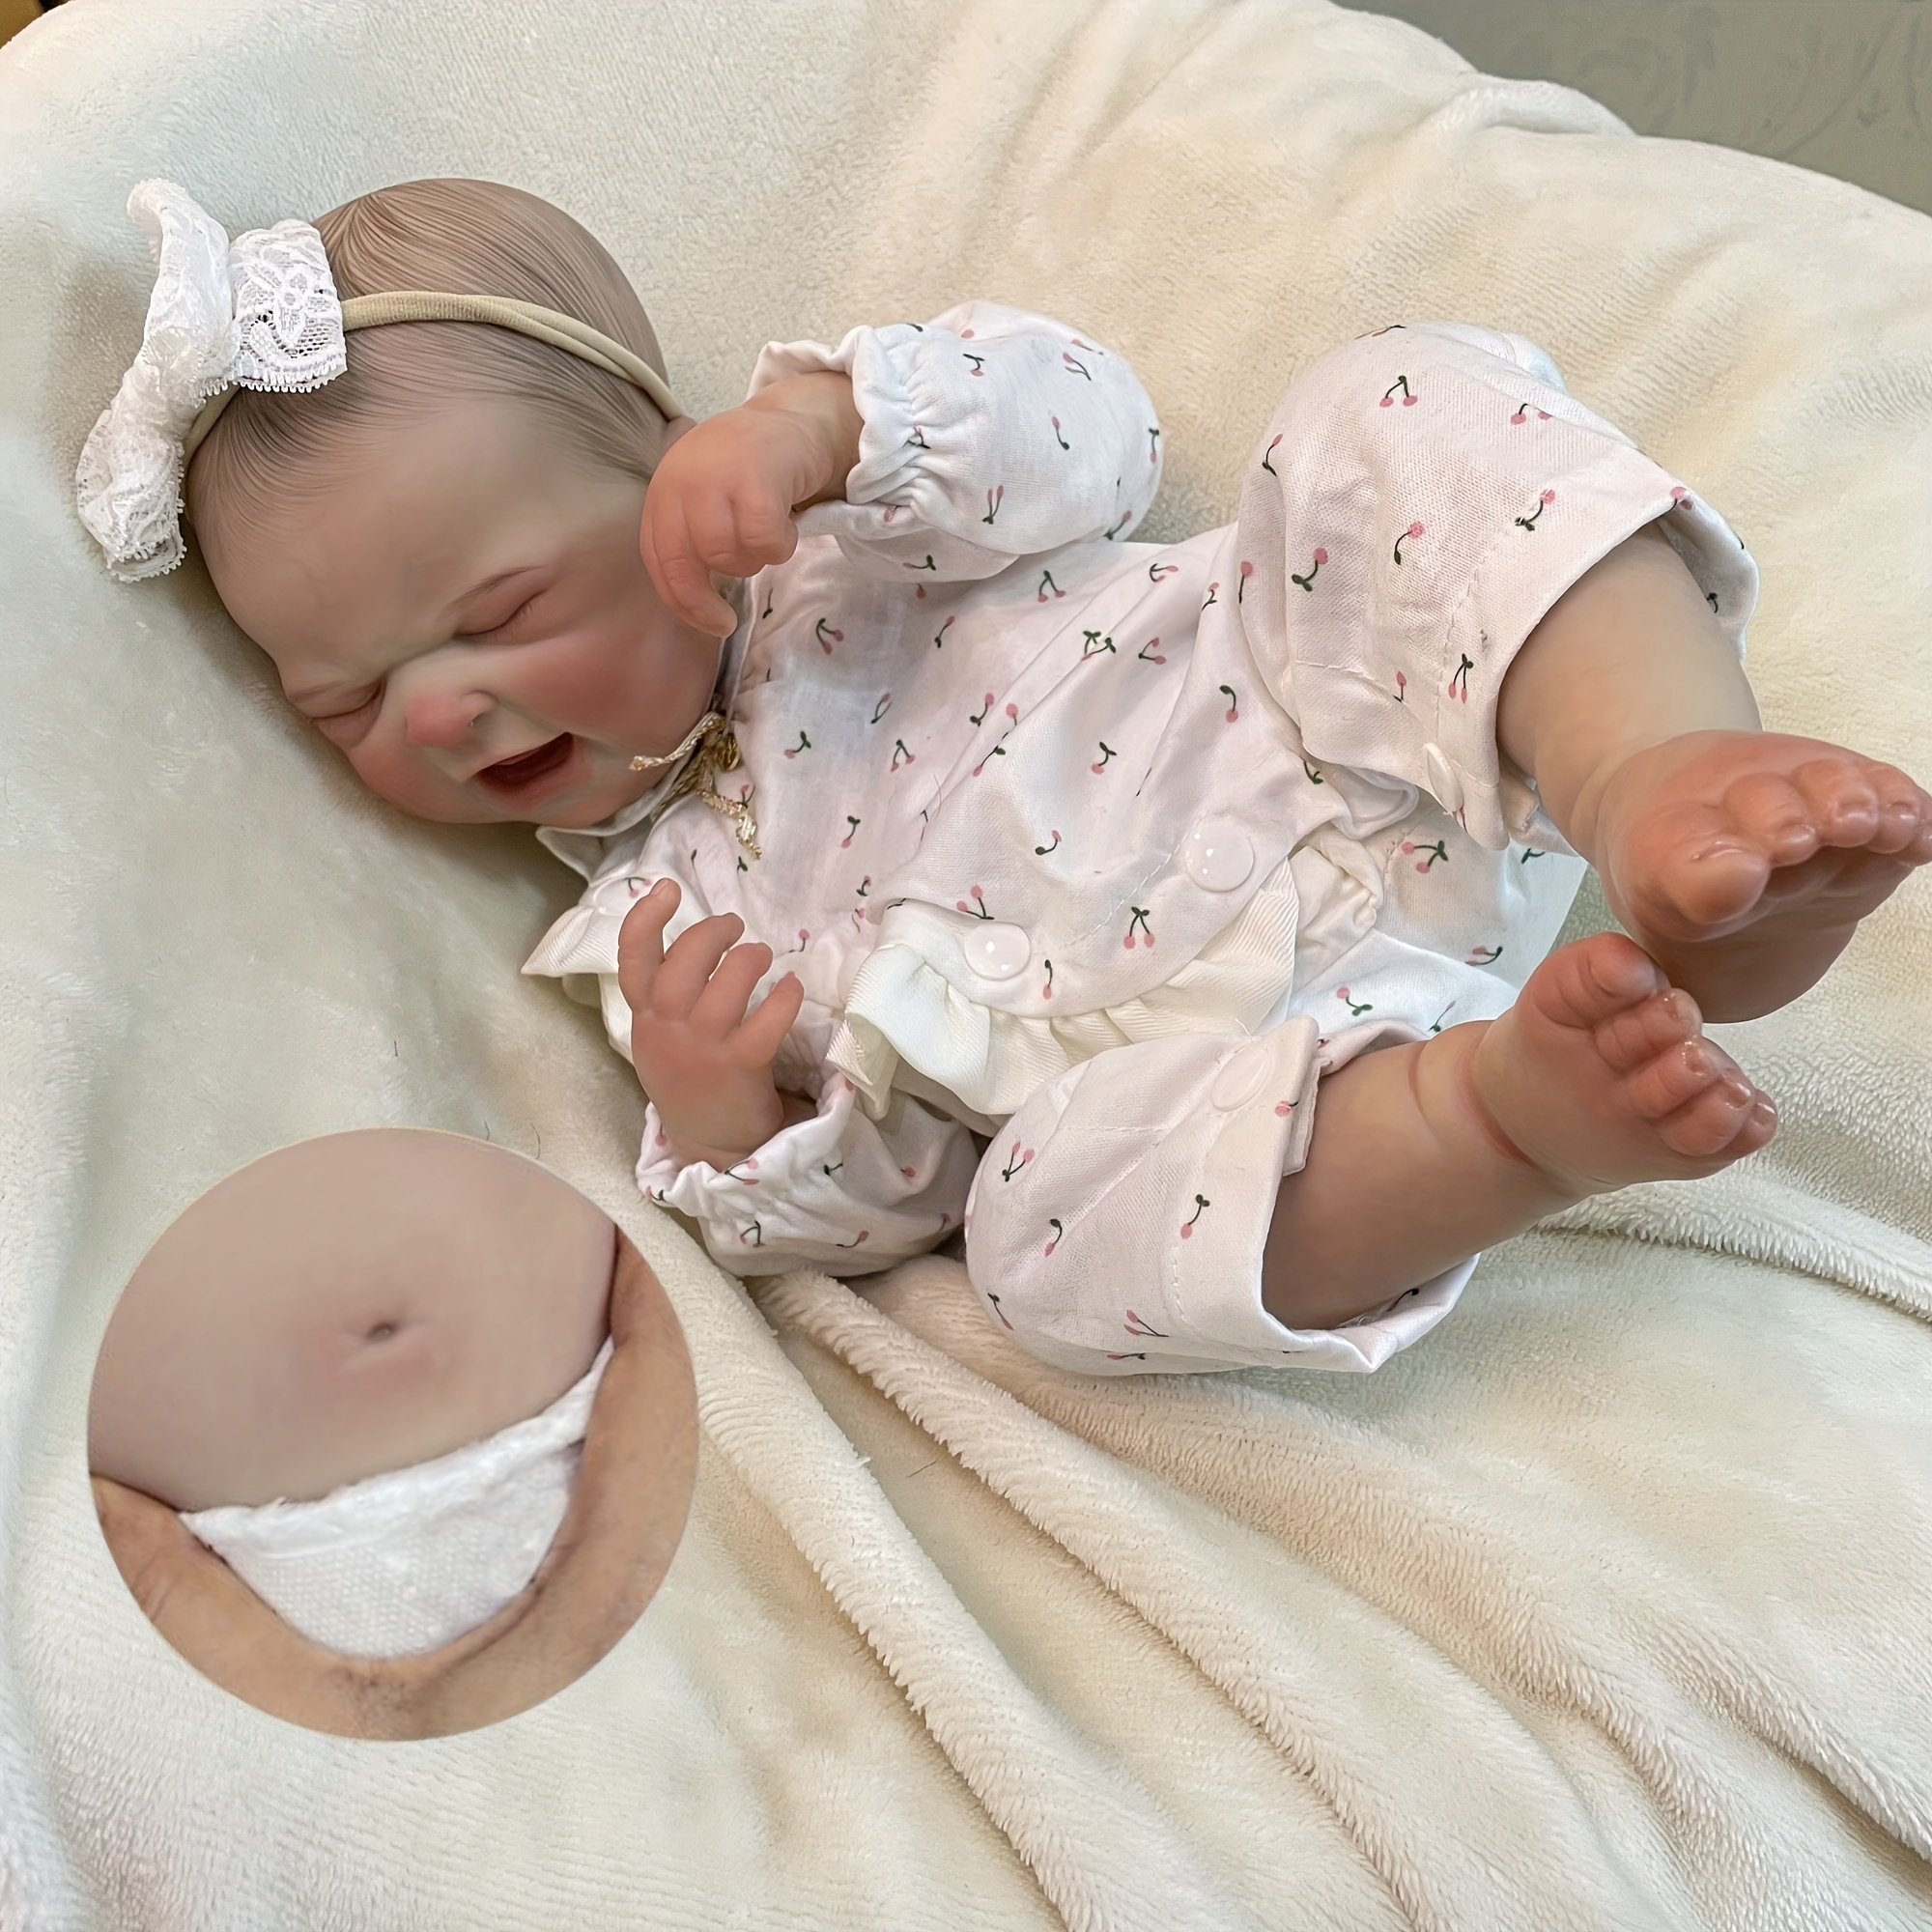  Anytec 12 inch Reborn Newborn Baby Dolls Look Real